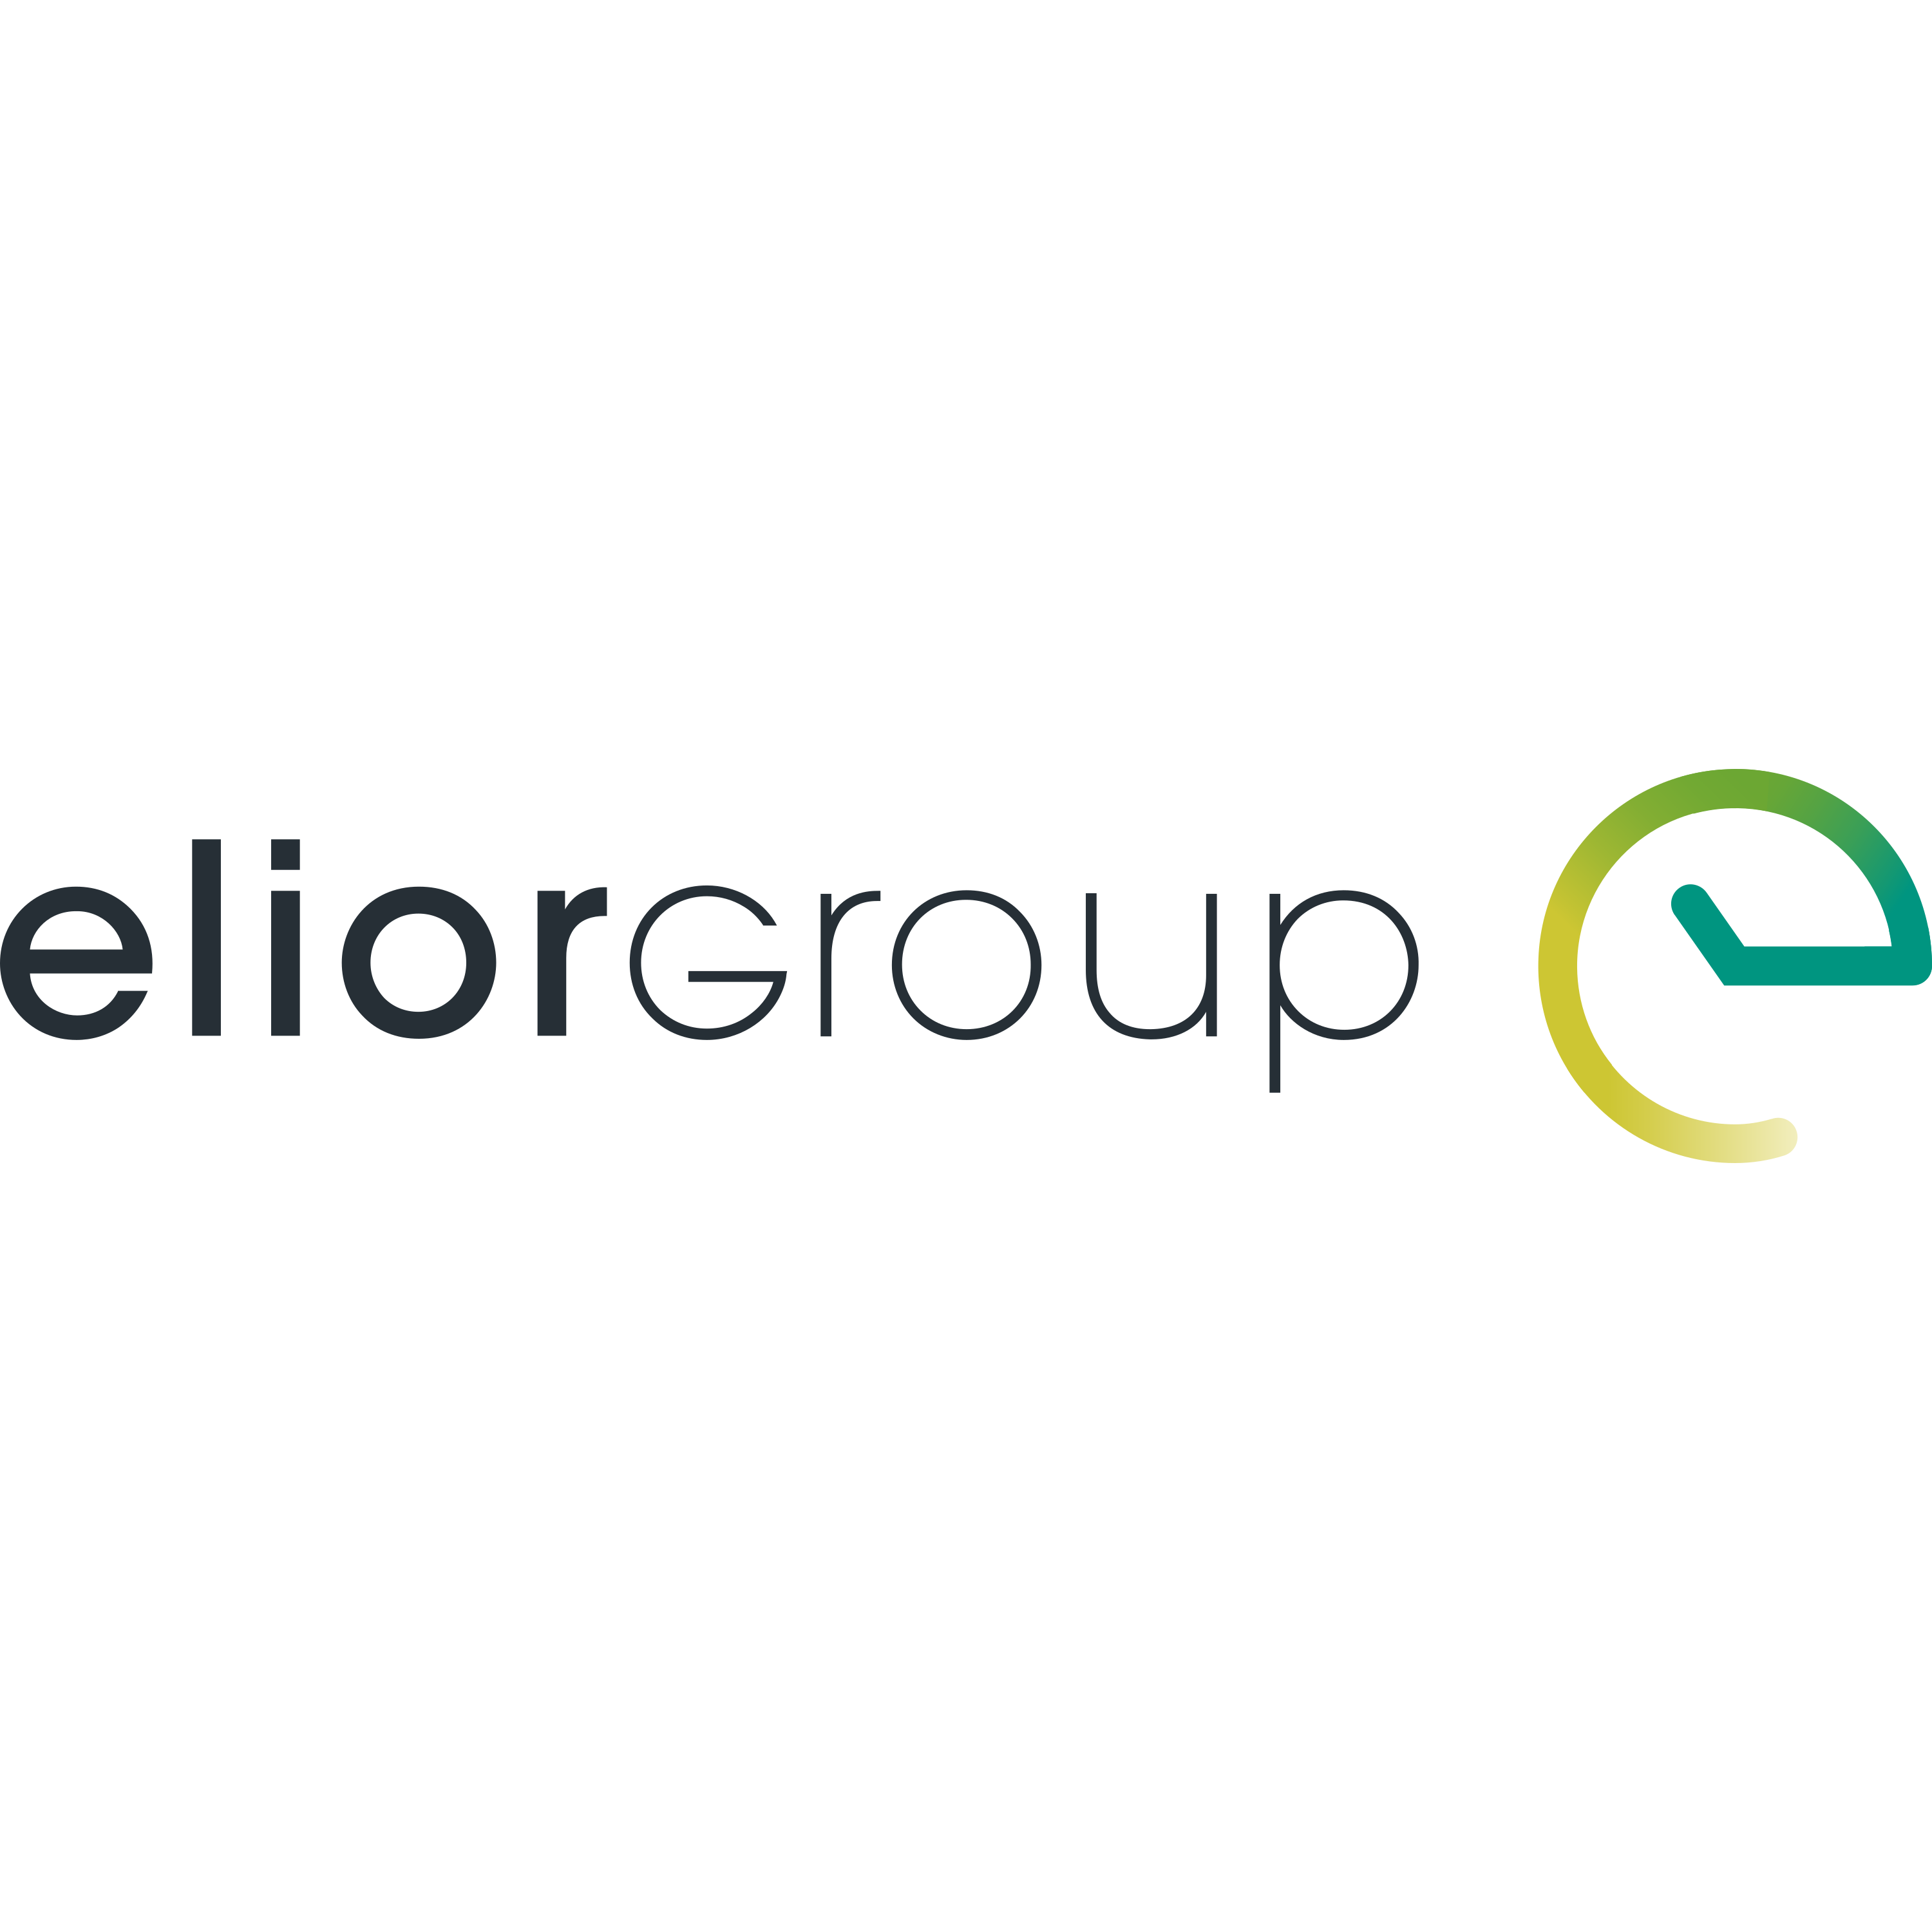 Elior Logo  Transparent Image